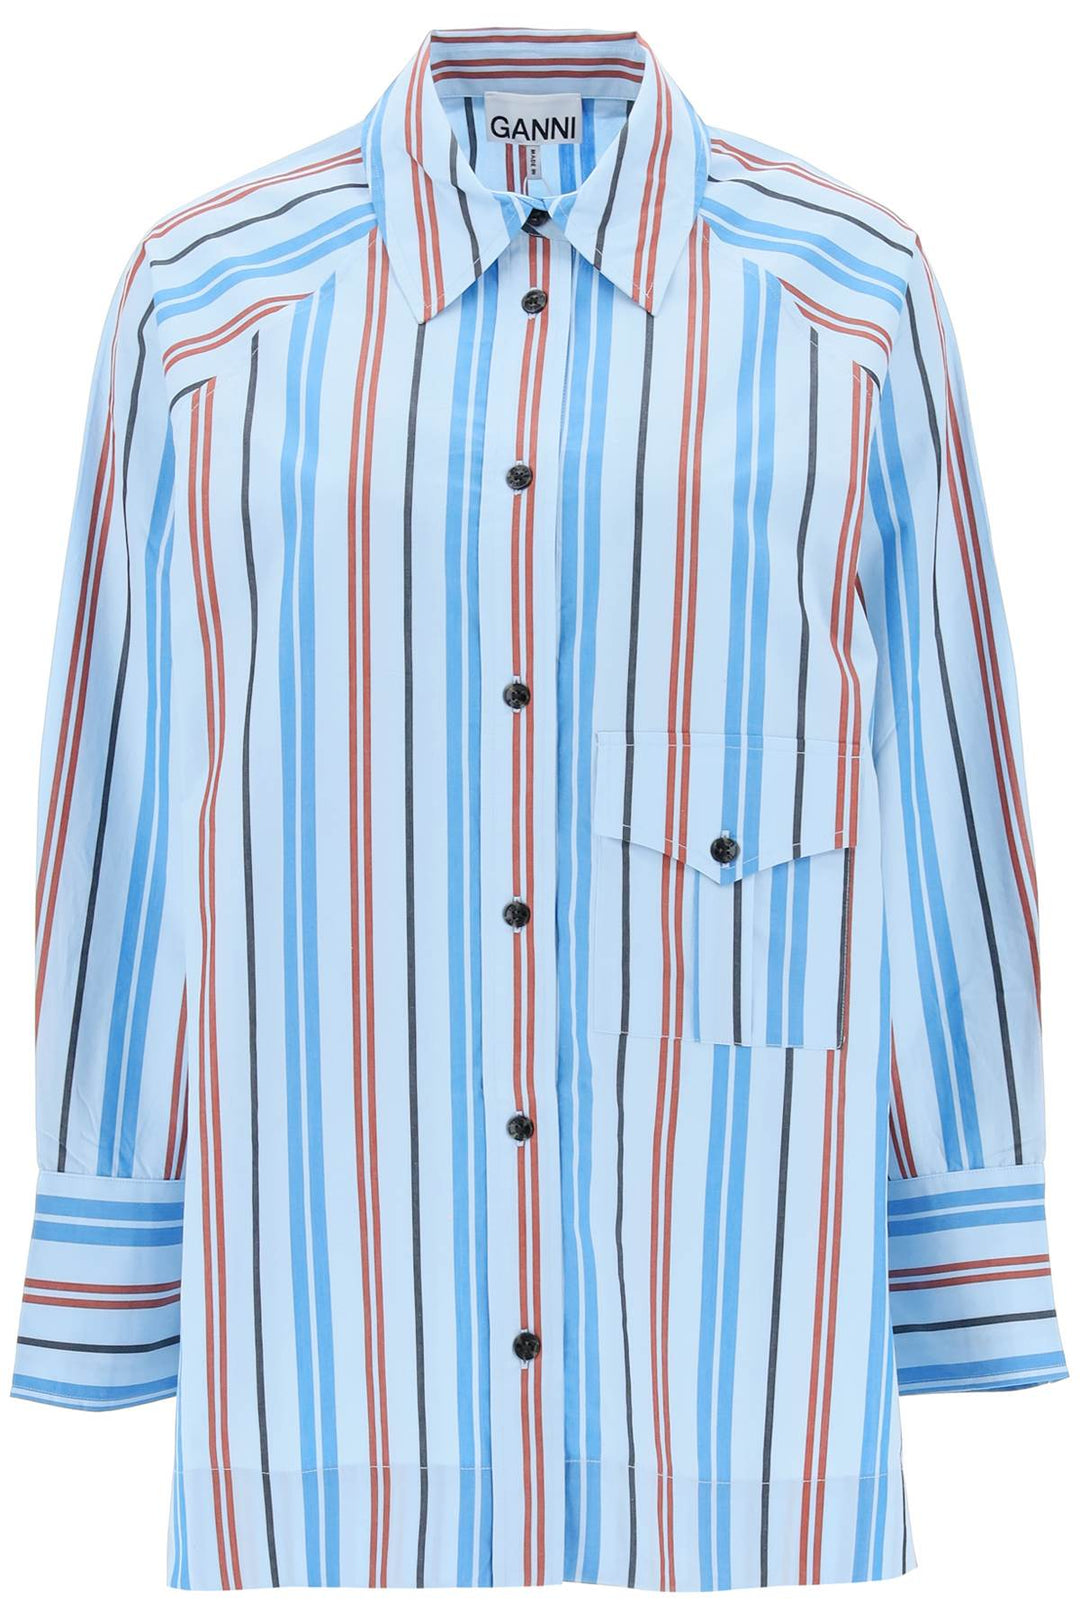 Ganni oversized striped shirt-0